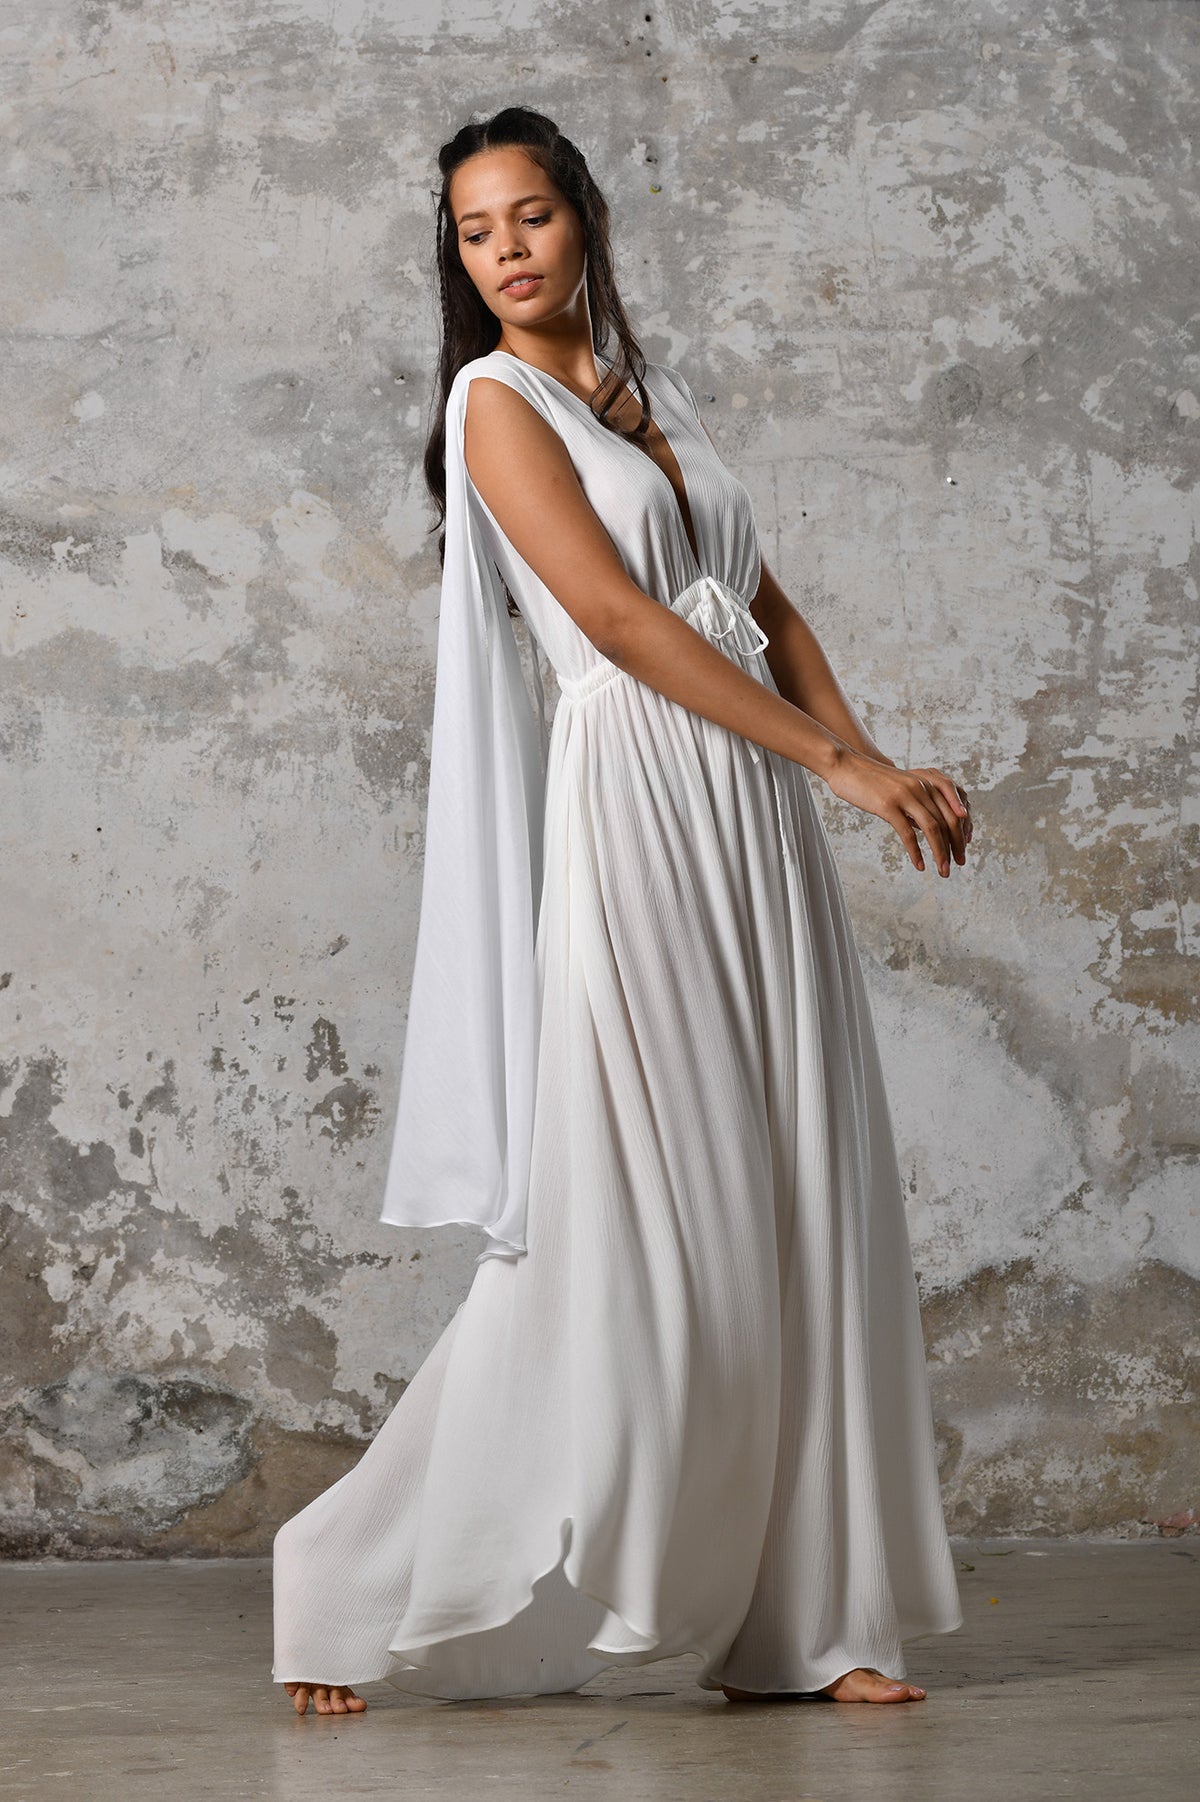 Goddess Bohemian Wedding Dress, a Simple Boho Wedding Dress with an Open Back Maxi design reminiscent of a Greek Goddess. This Elegant Dress is perfect for a Boho Fairy Tale wedding.